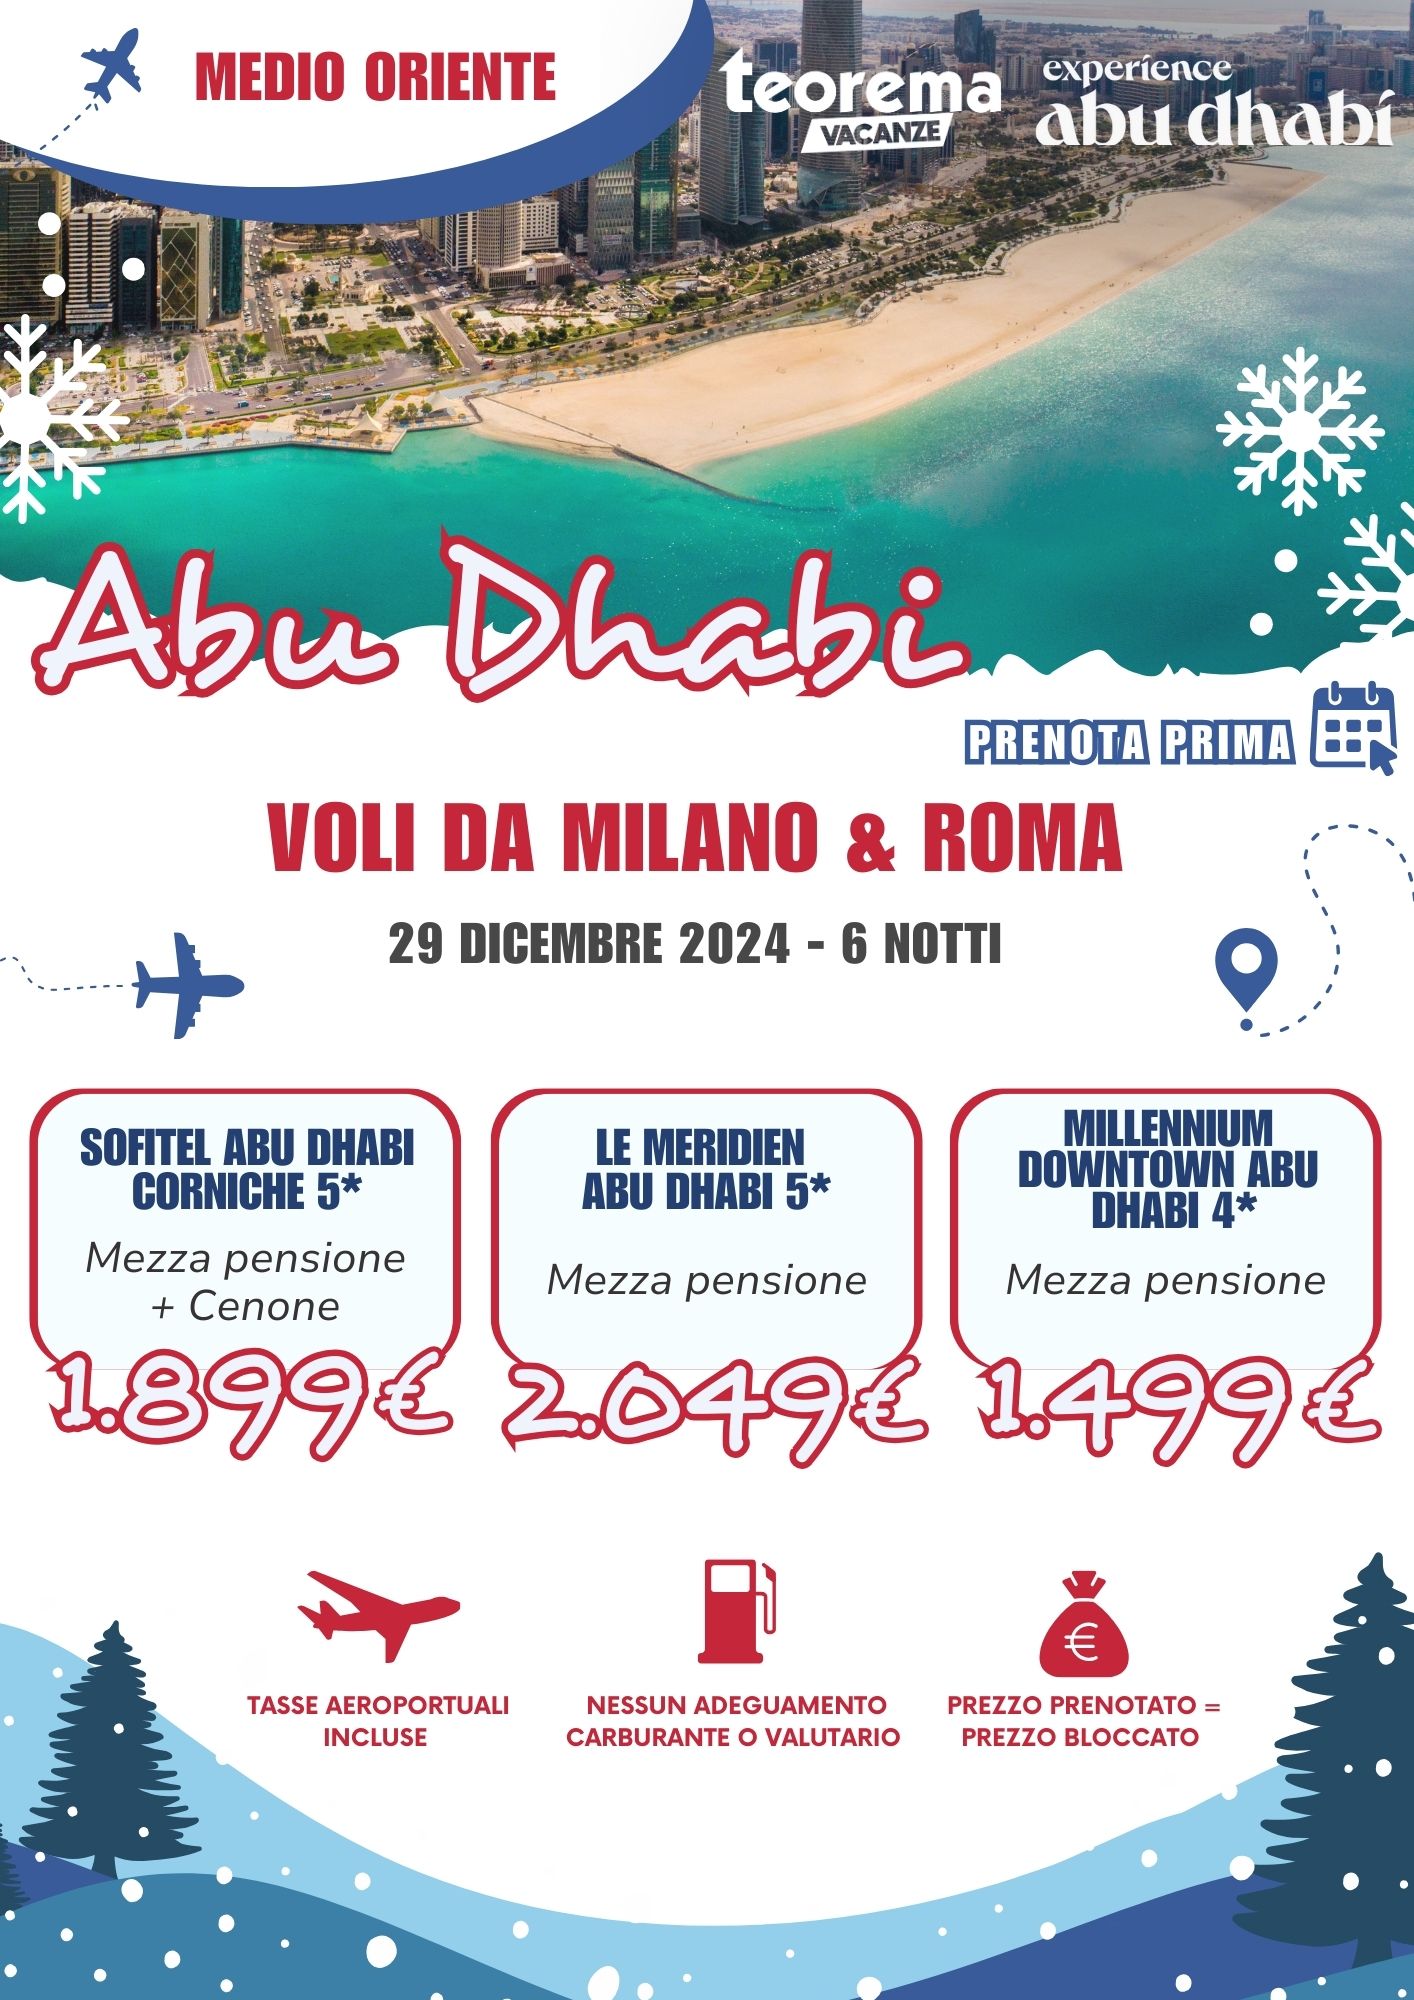 TEOREMA WINTER 2025 - ABU DHABI DA MILANO & ROMA